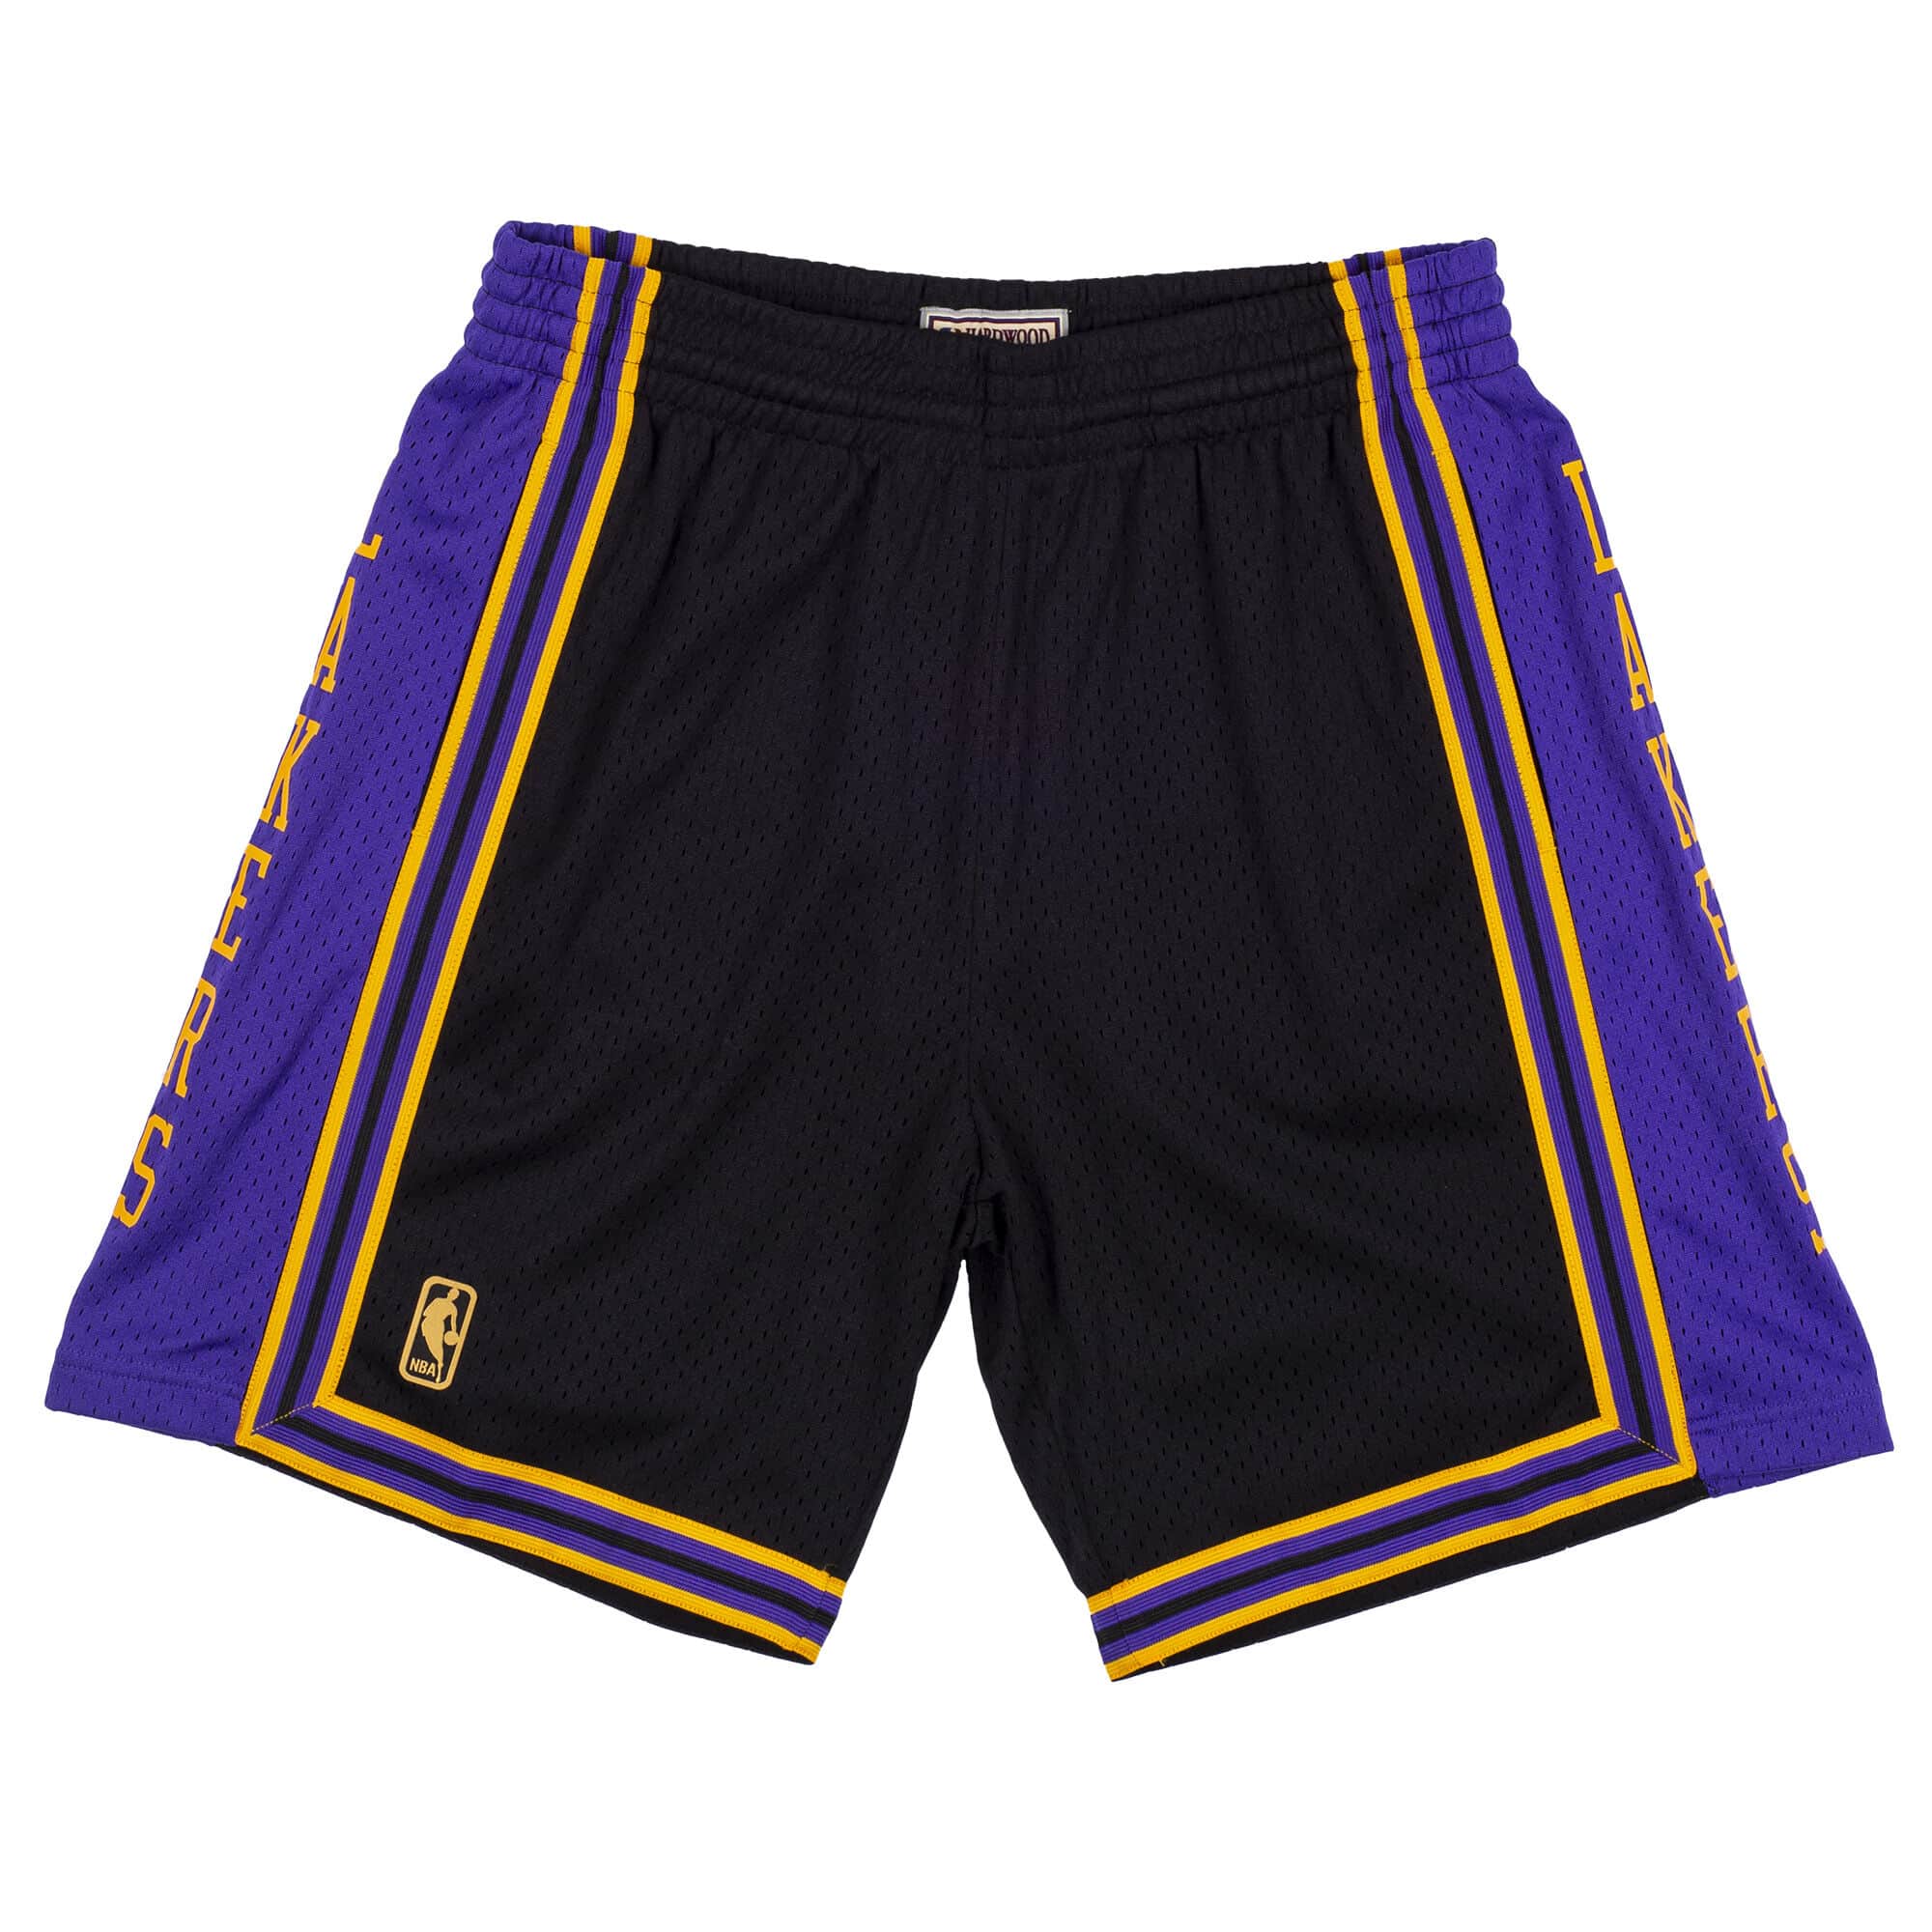 WEOPLKIN Lakers Basketball Shorts Mens Quick Dry Shorts La Lakers